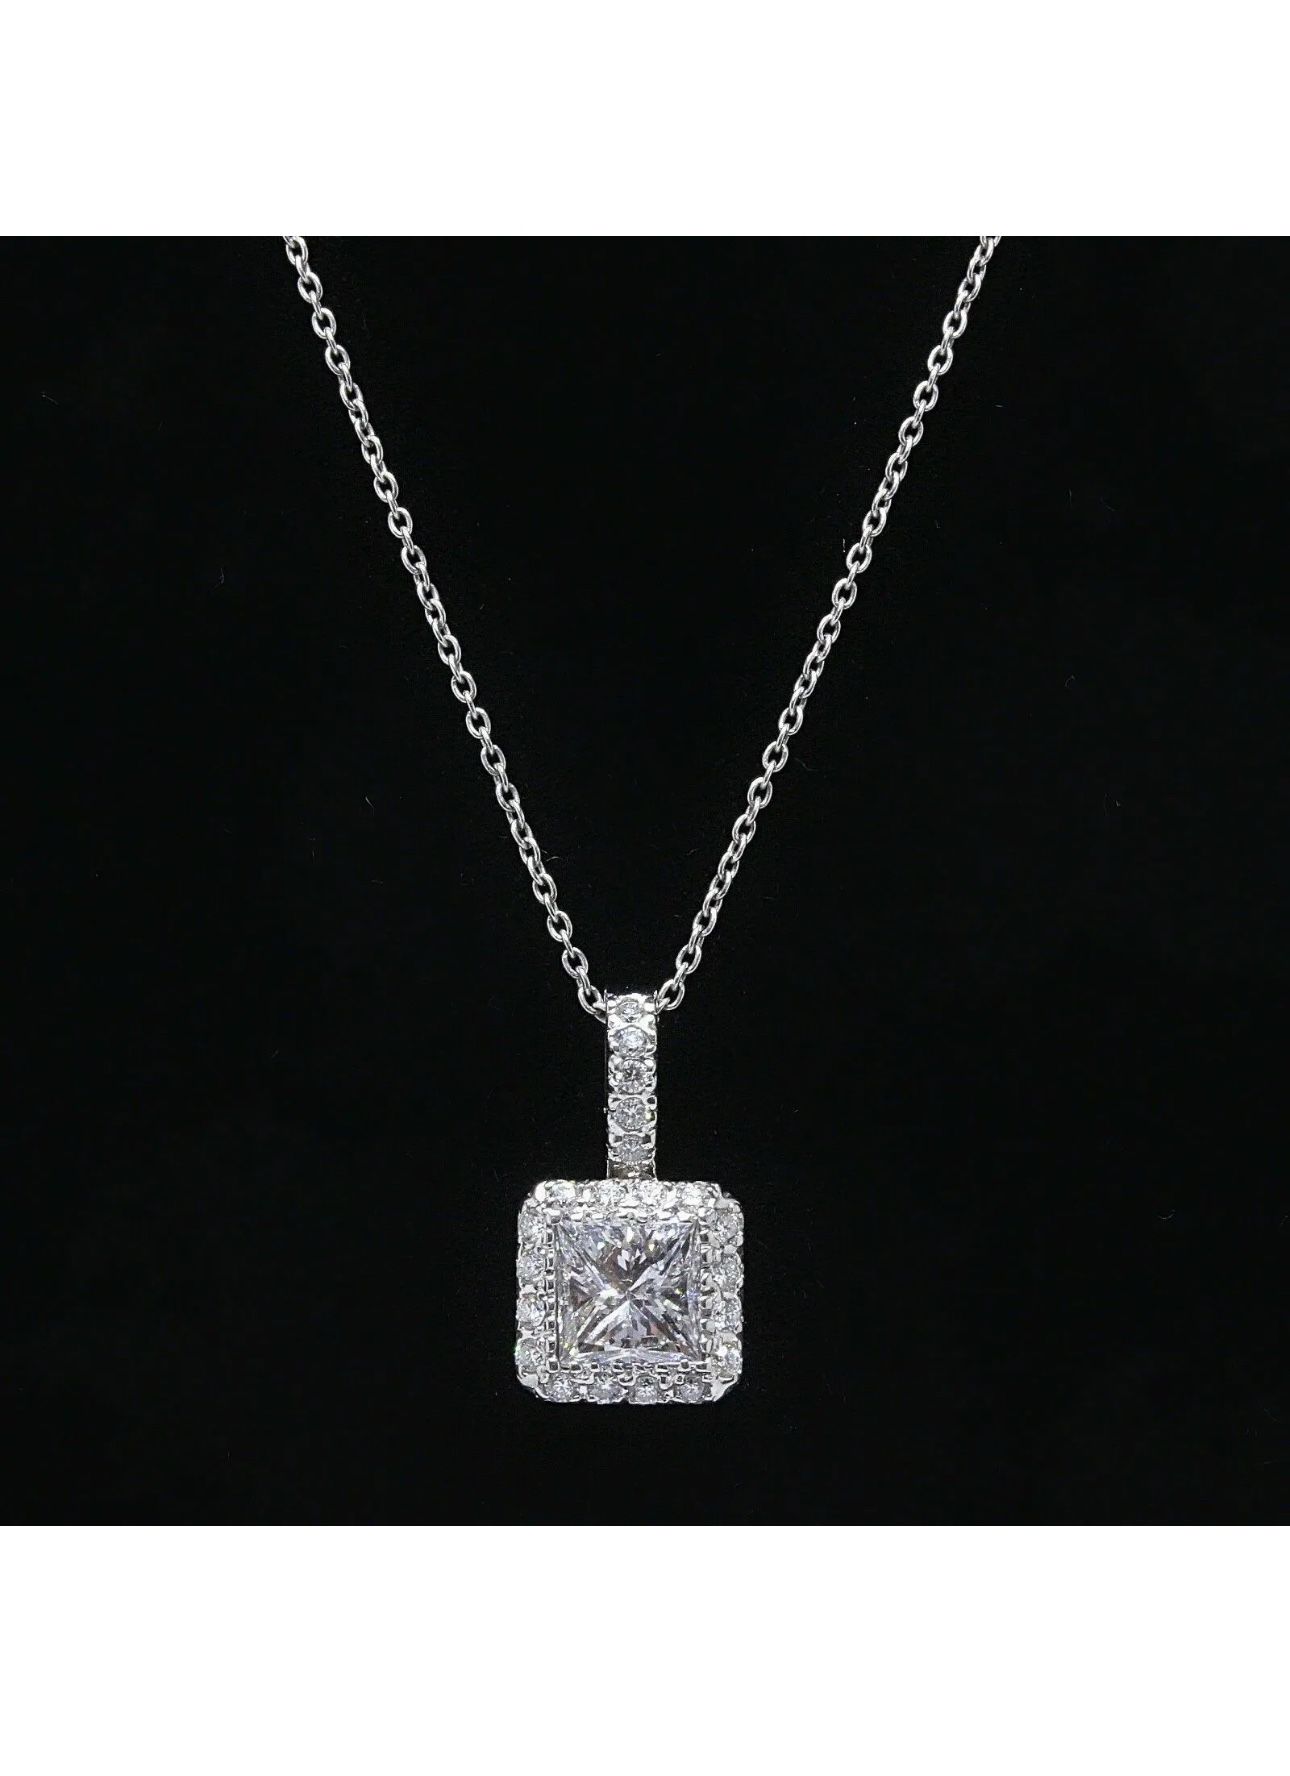 Princess Cut Diamond Pendant Necklace Halo Design in 14k White Gold